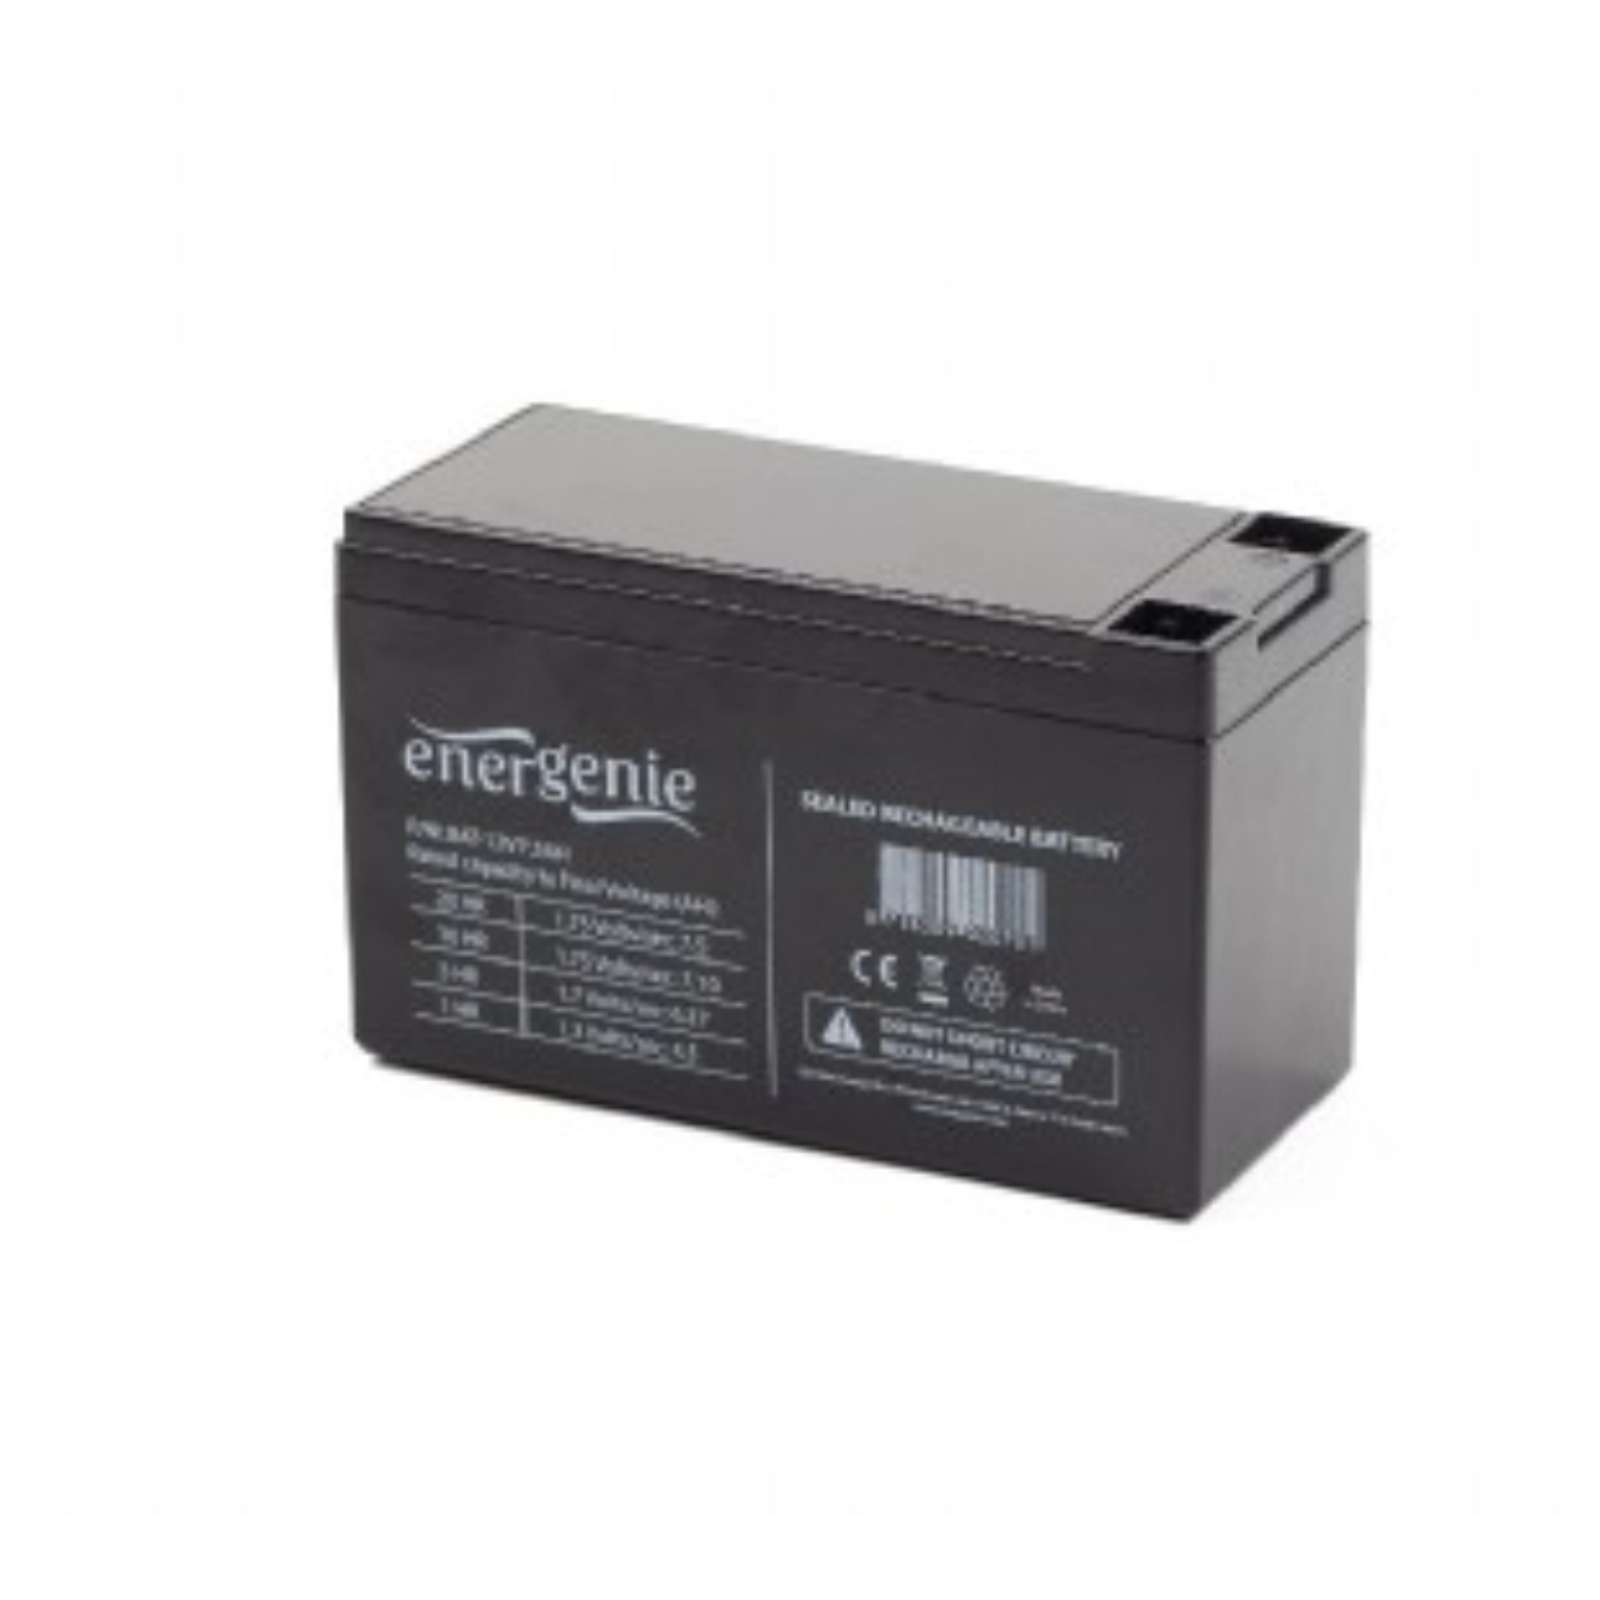 Batteria sigillata al piombo 12V 7.2Ah sostituzione UPS - Cablematic